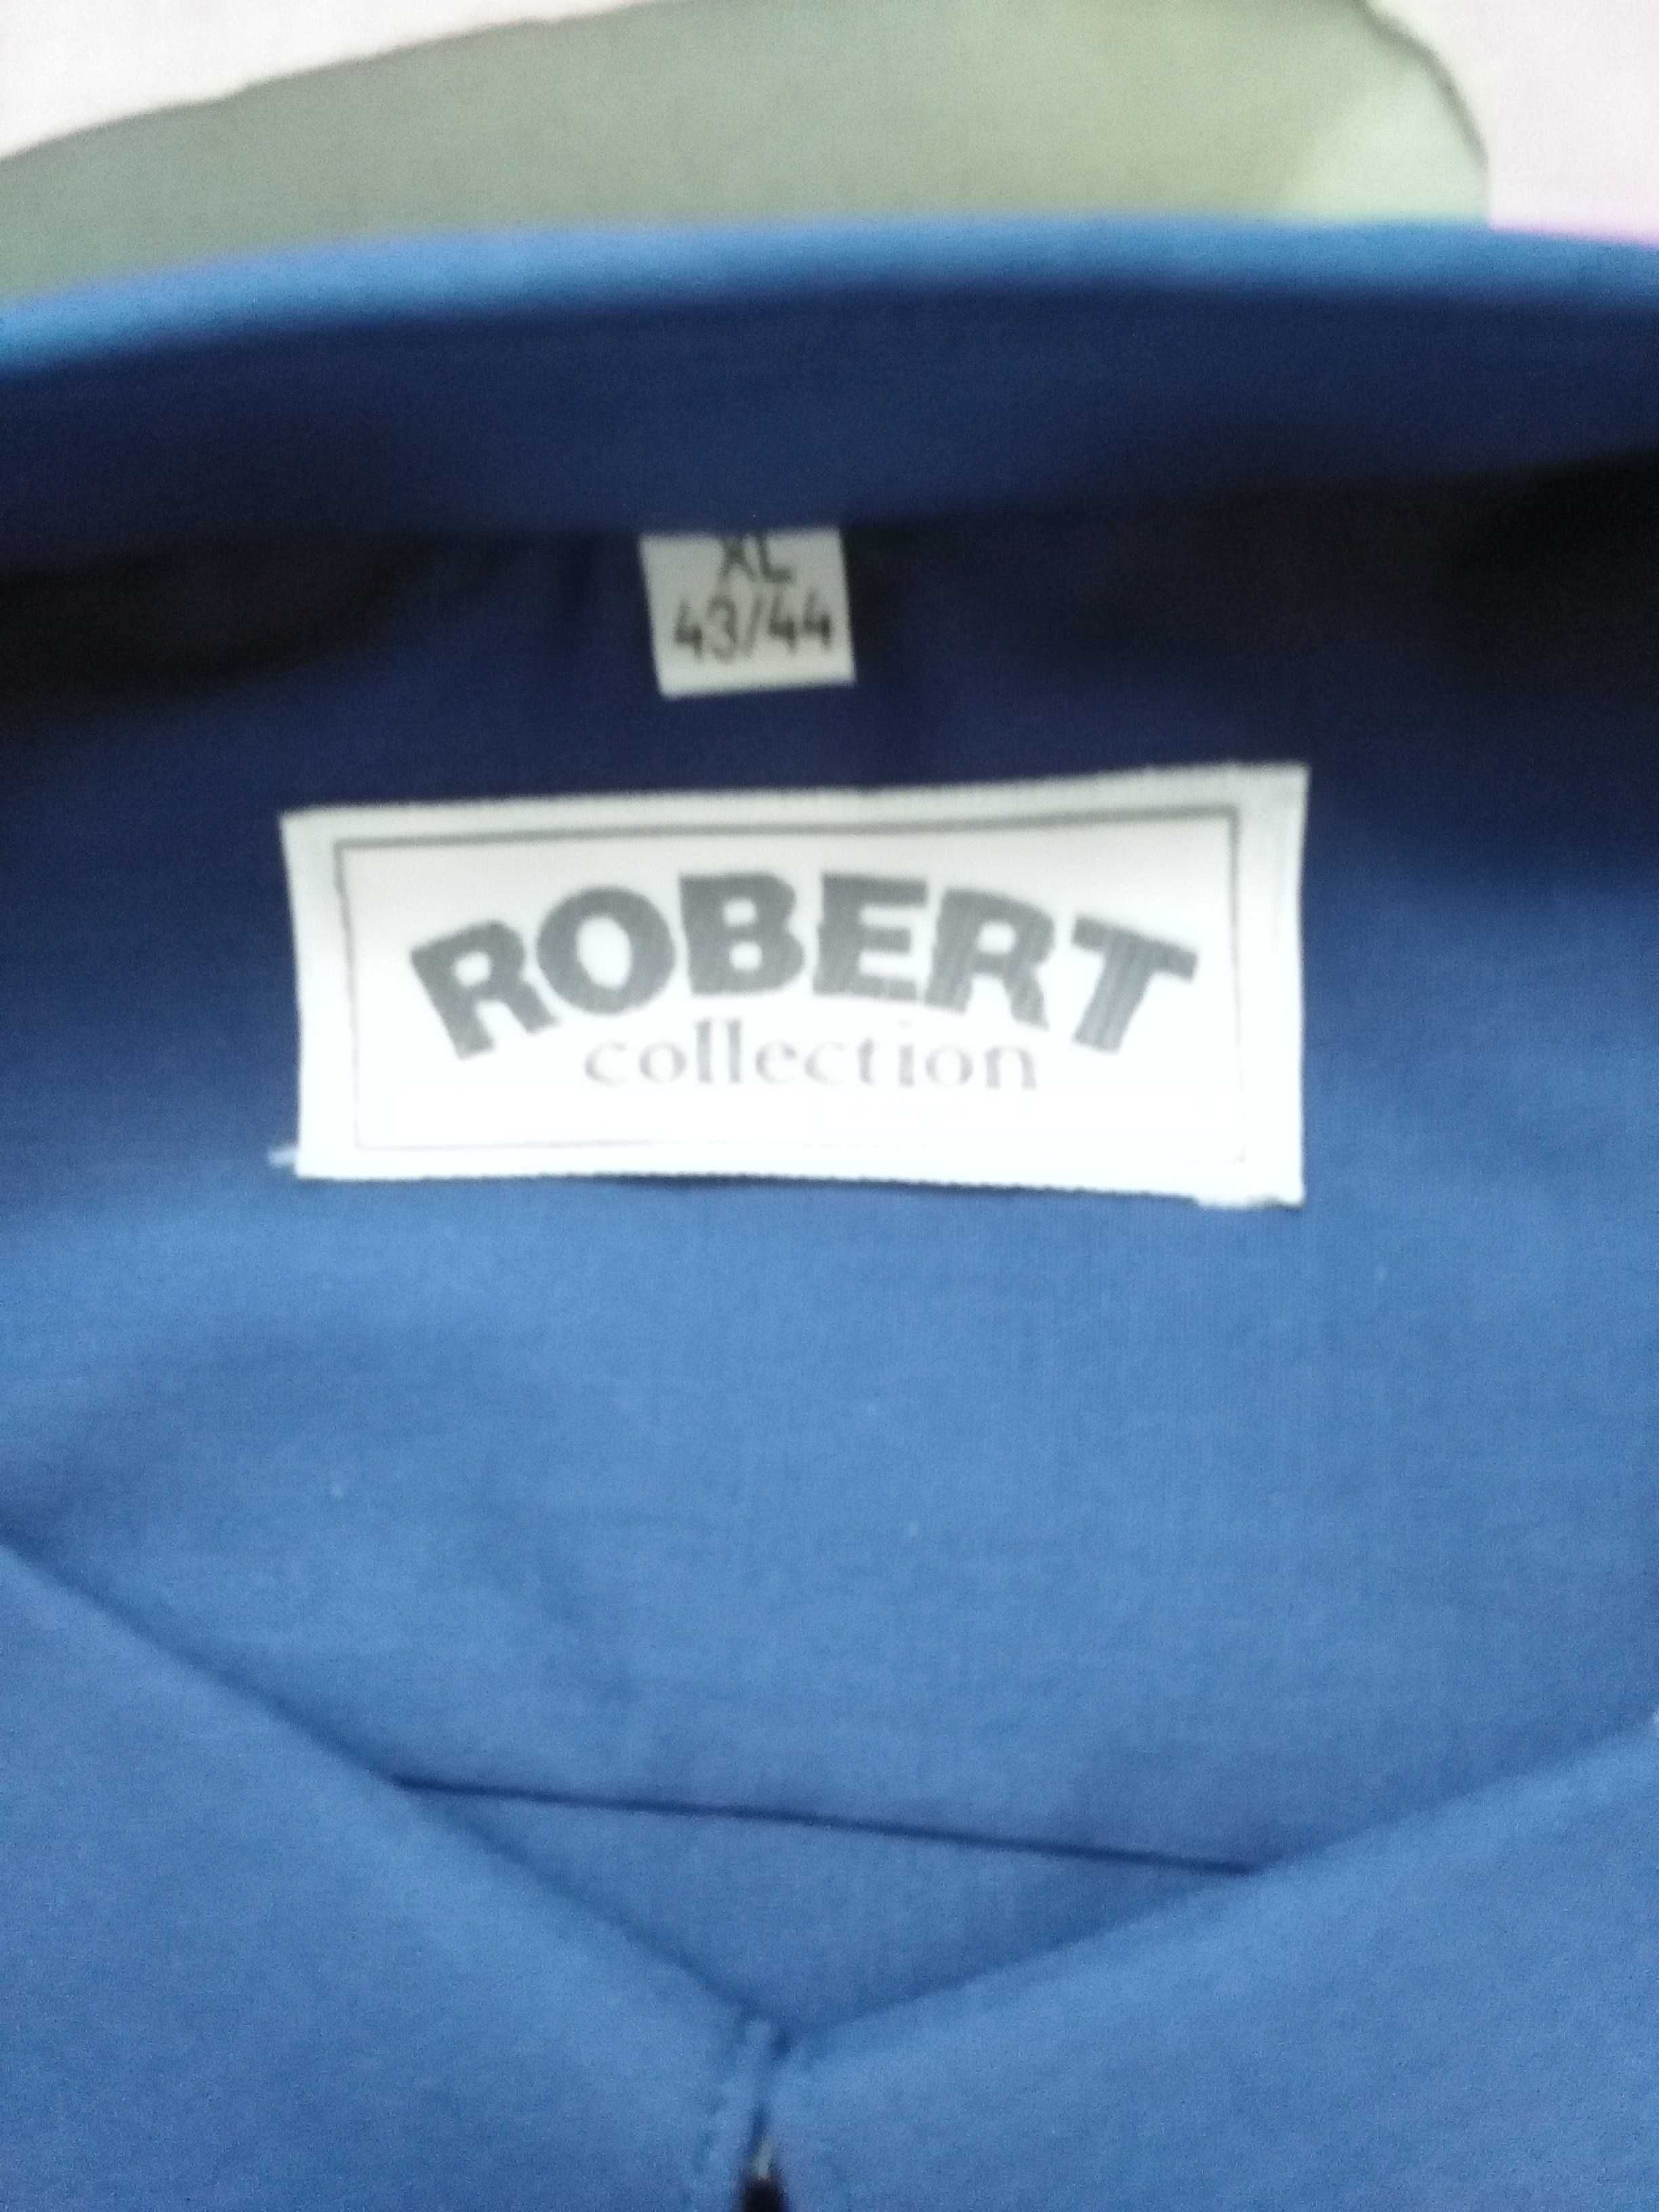 Мъжка риза Robert Collection, размер 43/44, XL